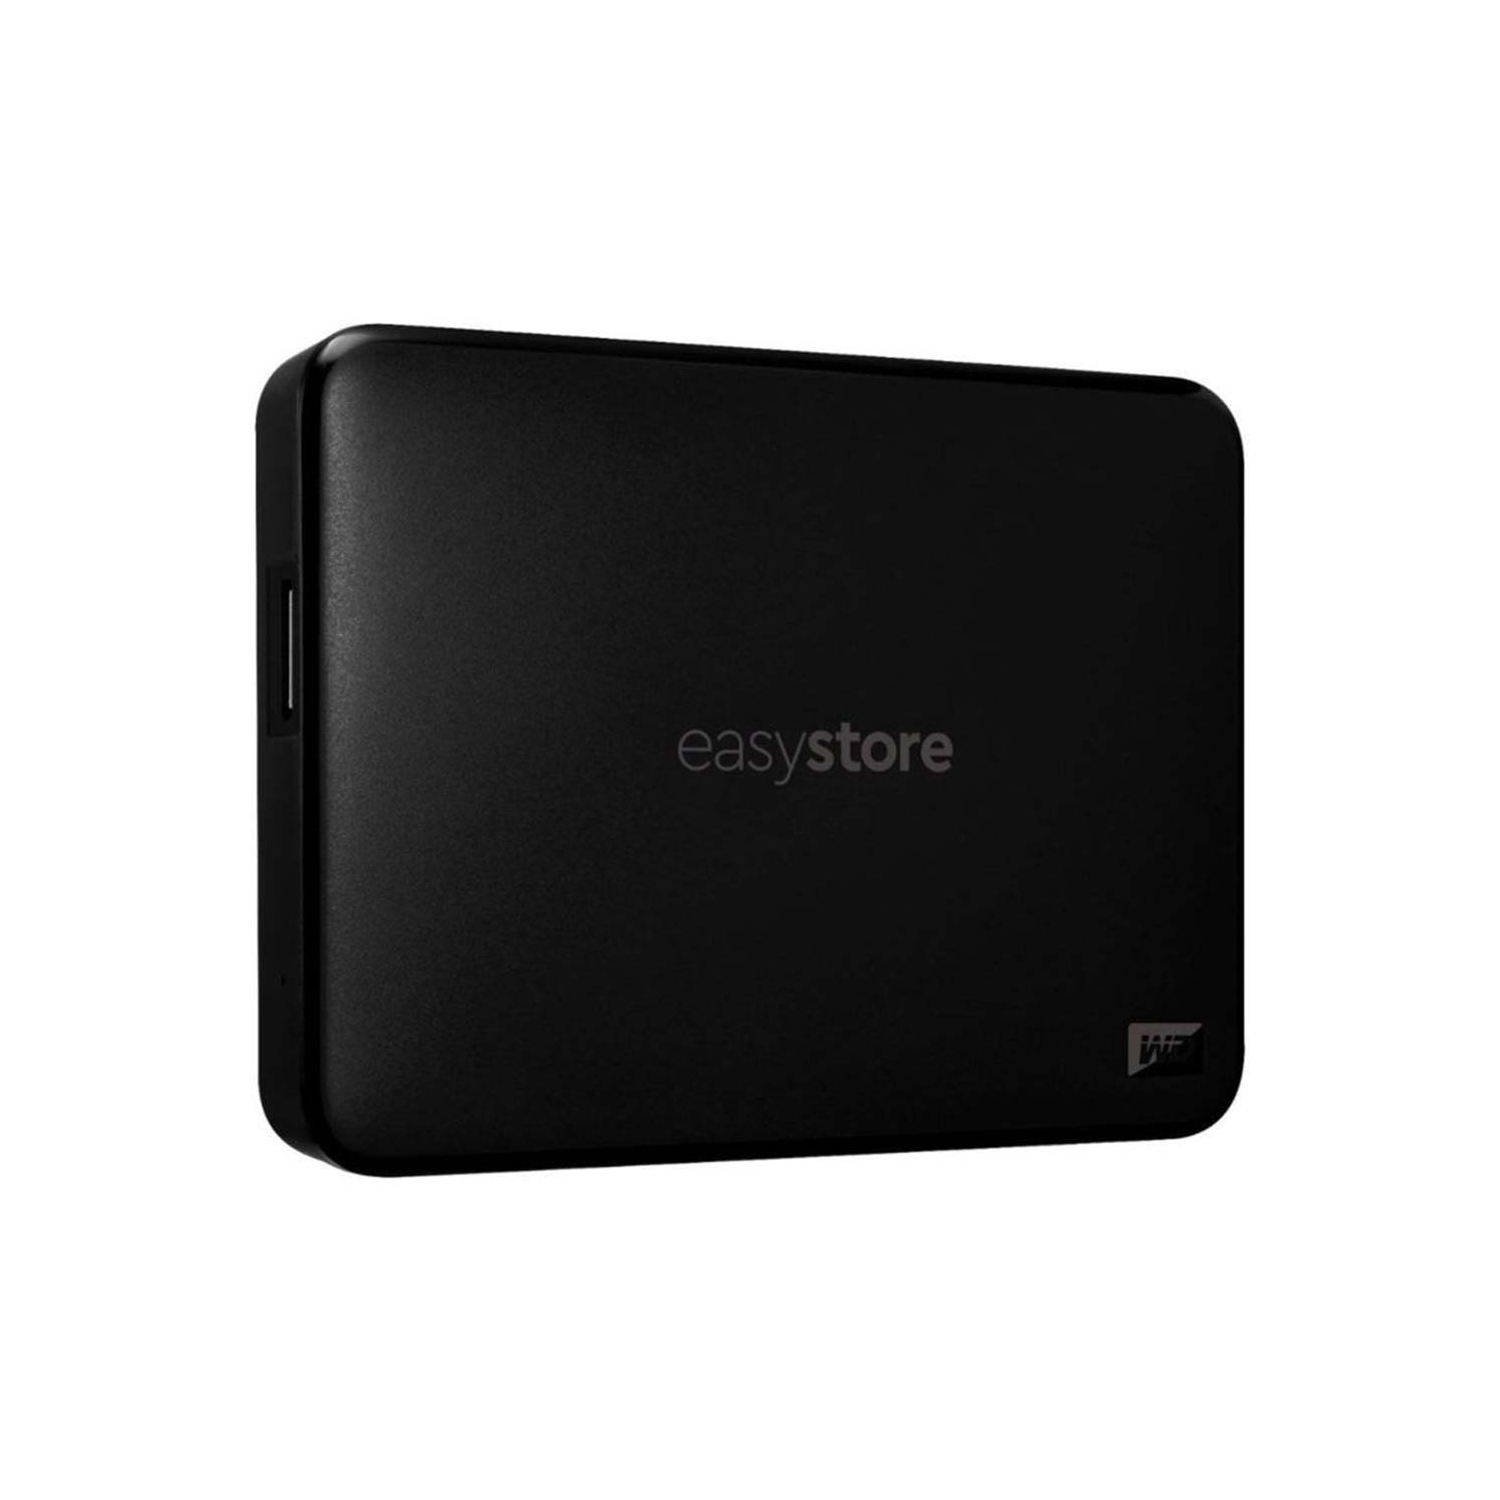 Western Digital Easystore 4TB USB 3.0 Portable External Hard